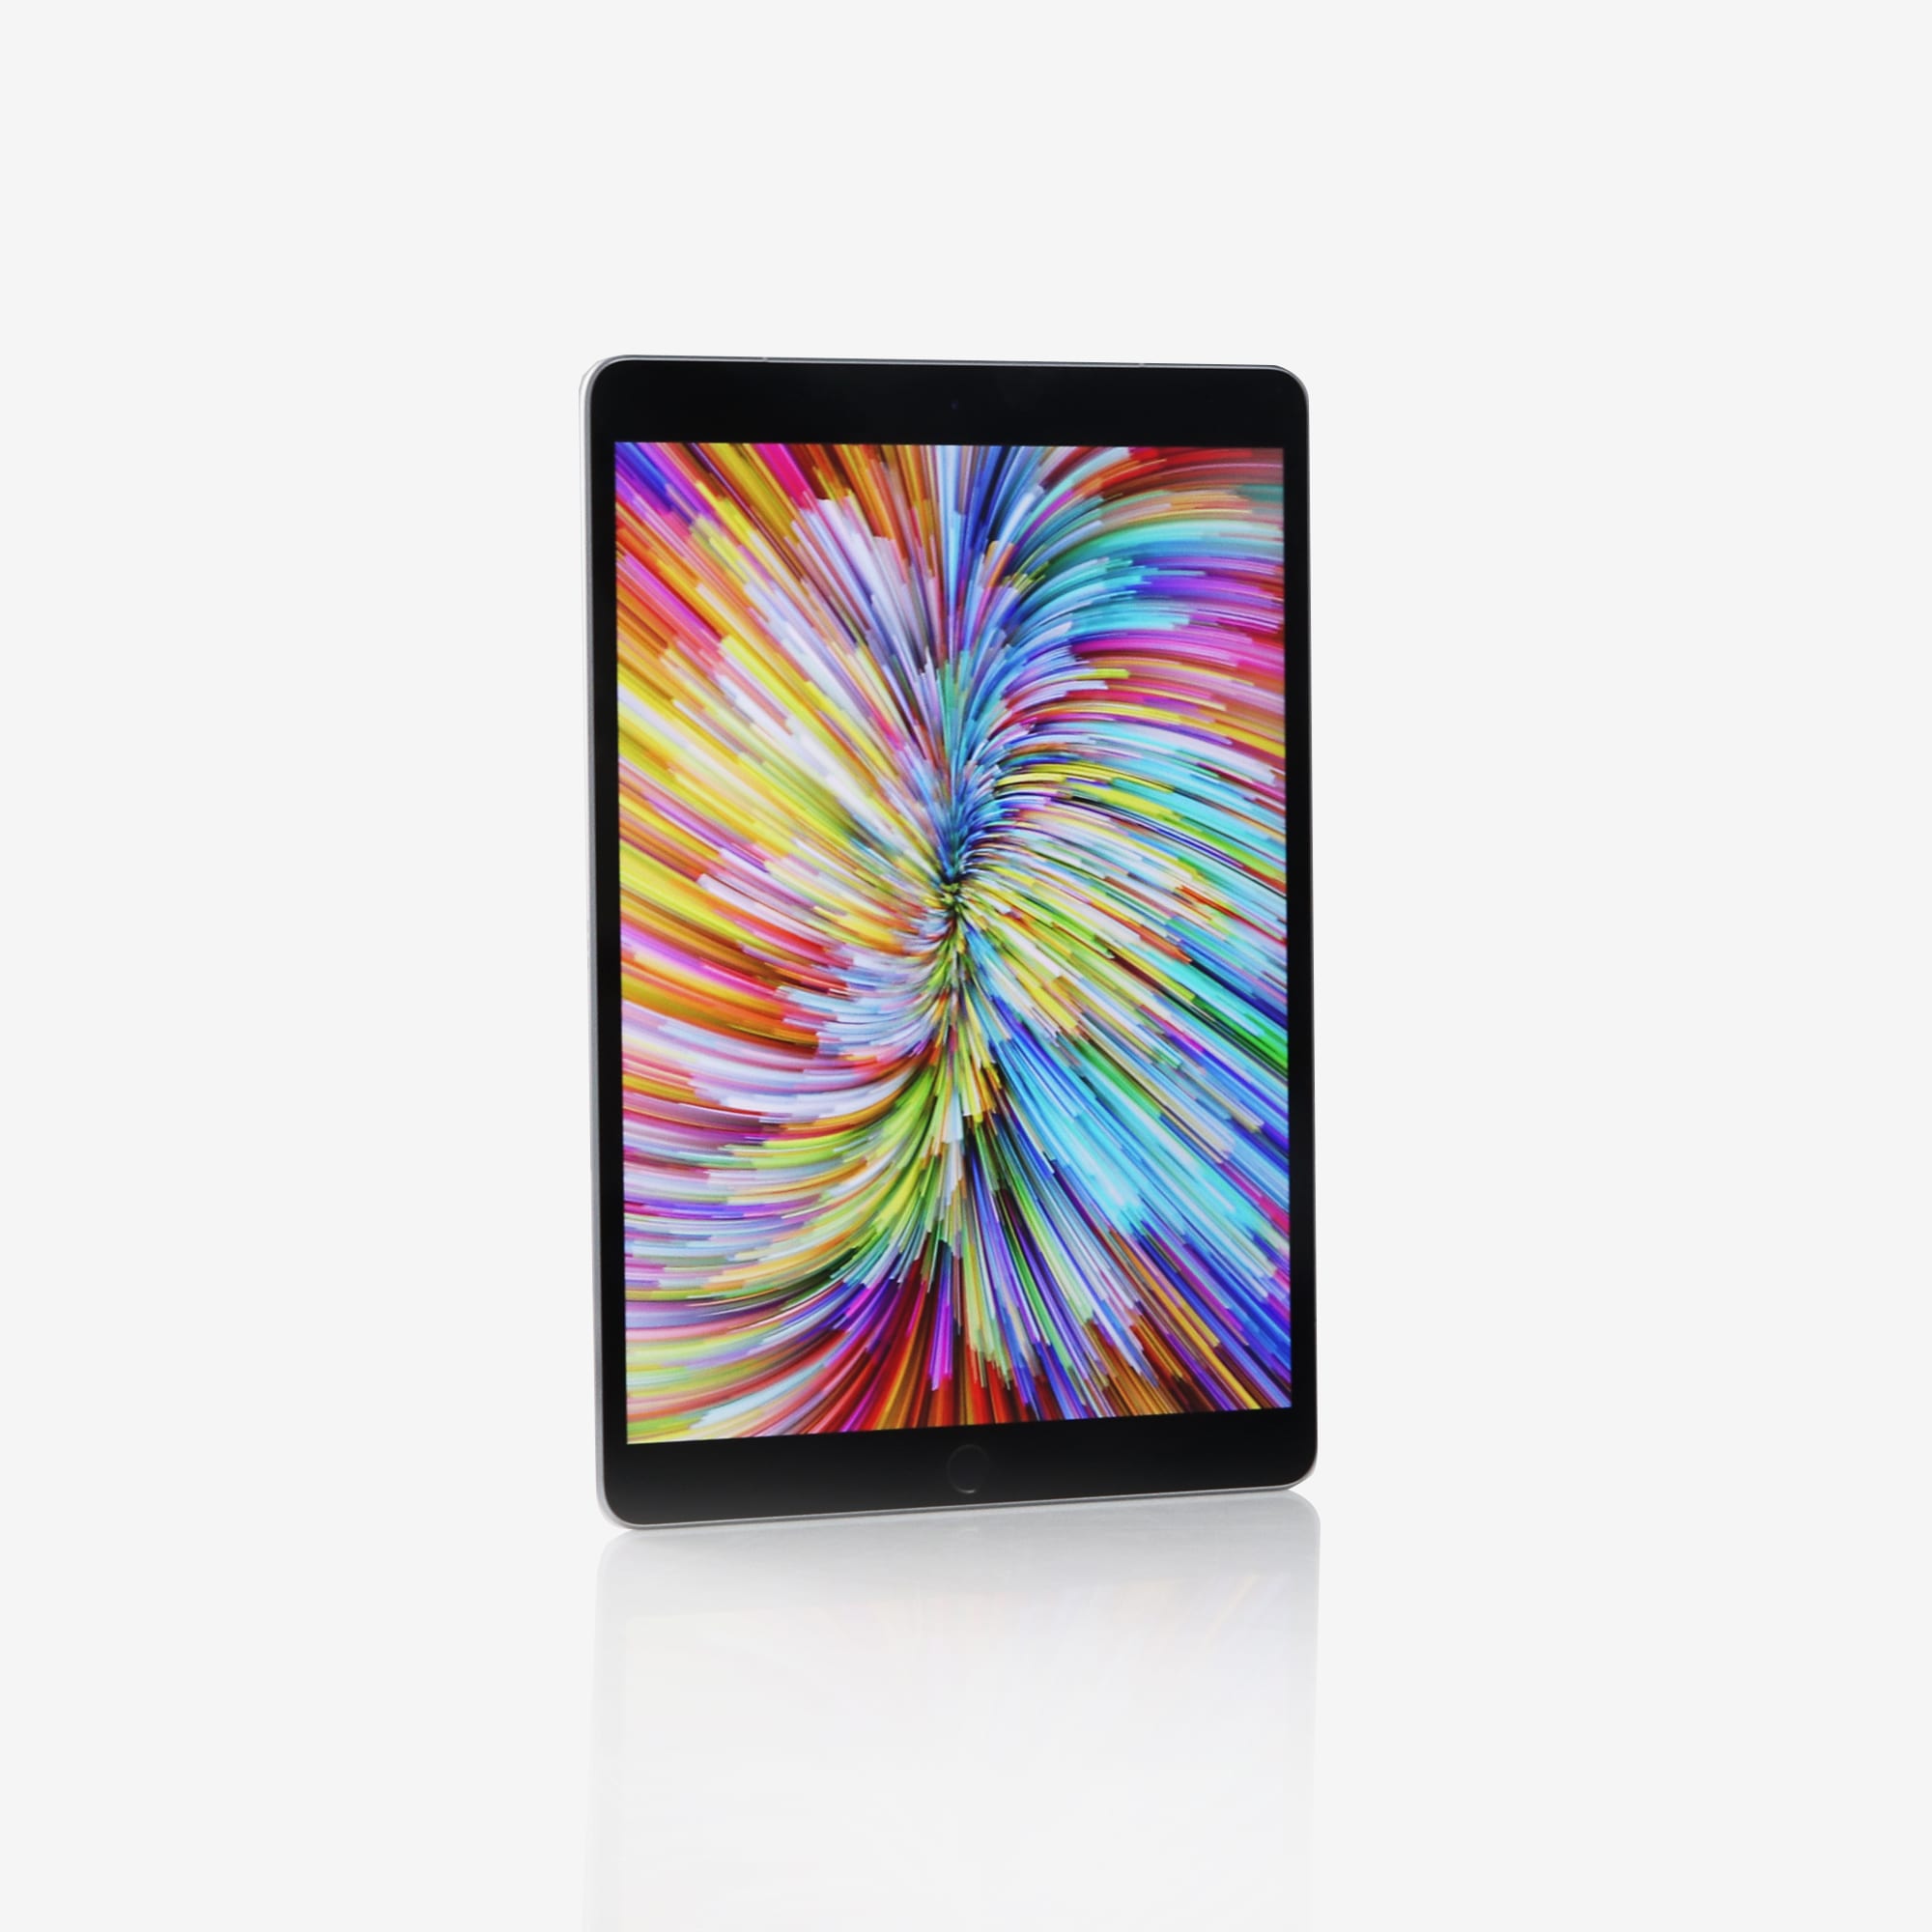 1 x iPad Pro (10.5-inch) (Wi-Fi + Cellular) Space Grey